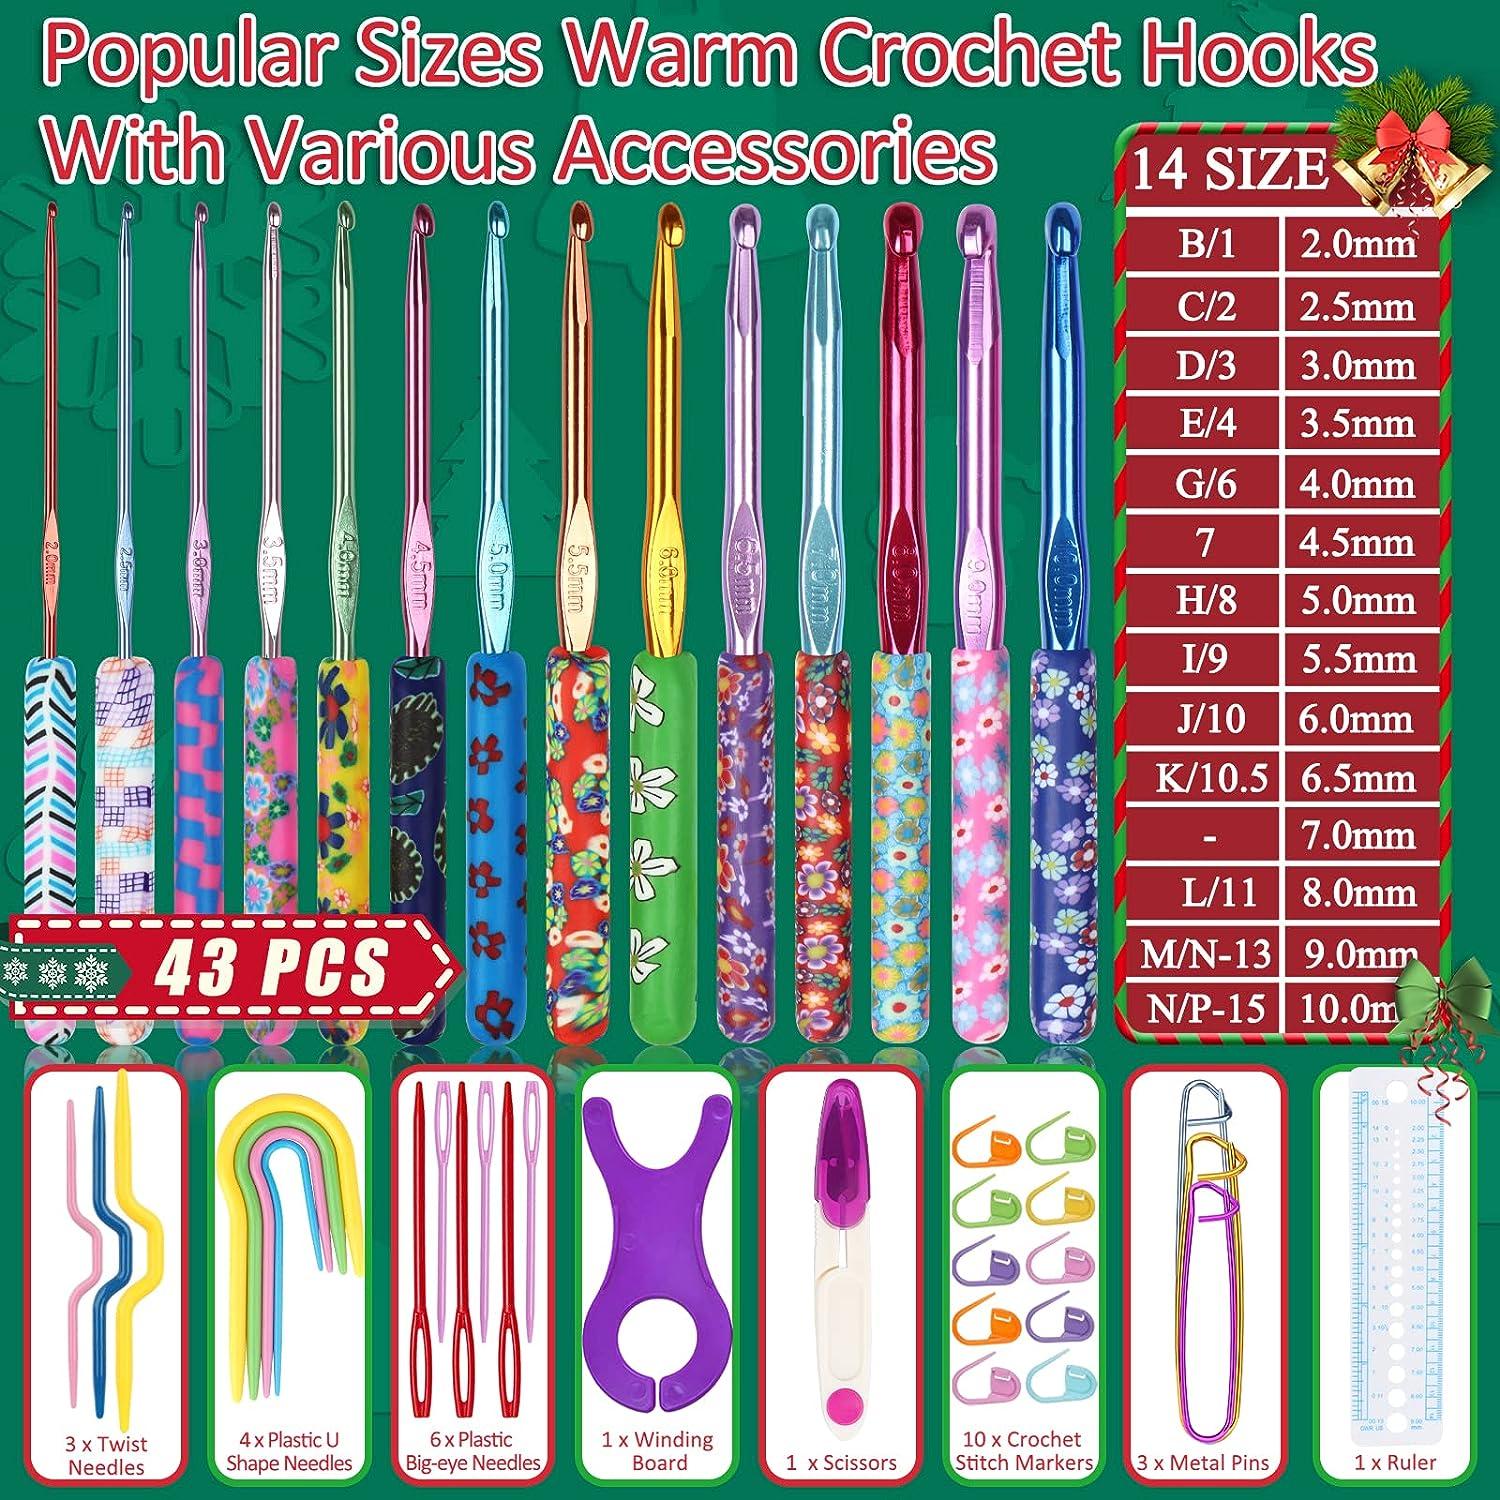 Coopay Christmas Crochet Gifts, 43PCS Warm Crochet Hooks Beginners